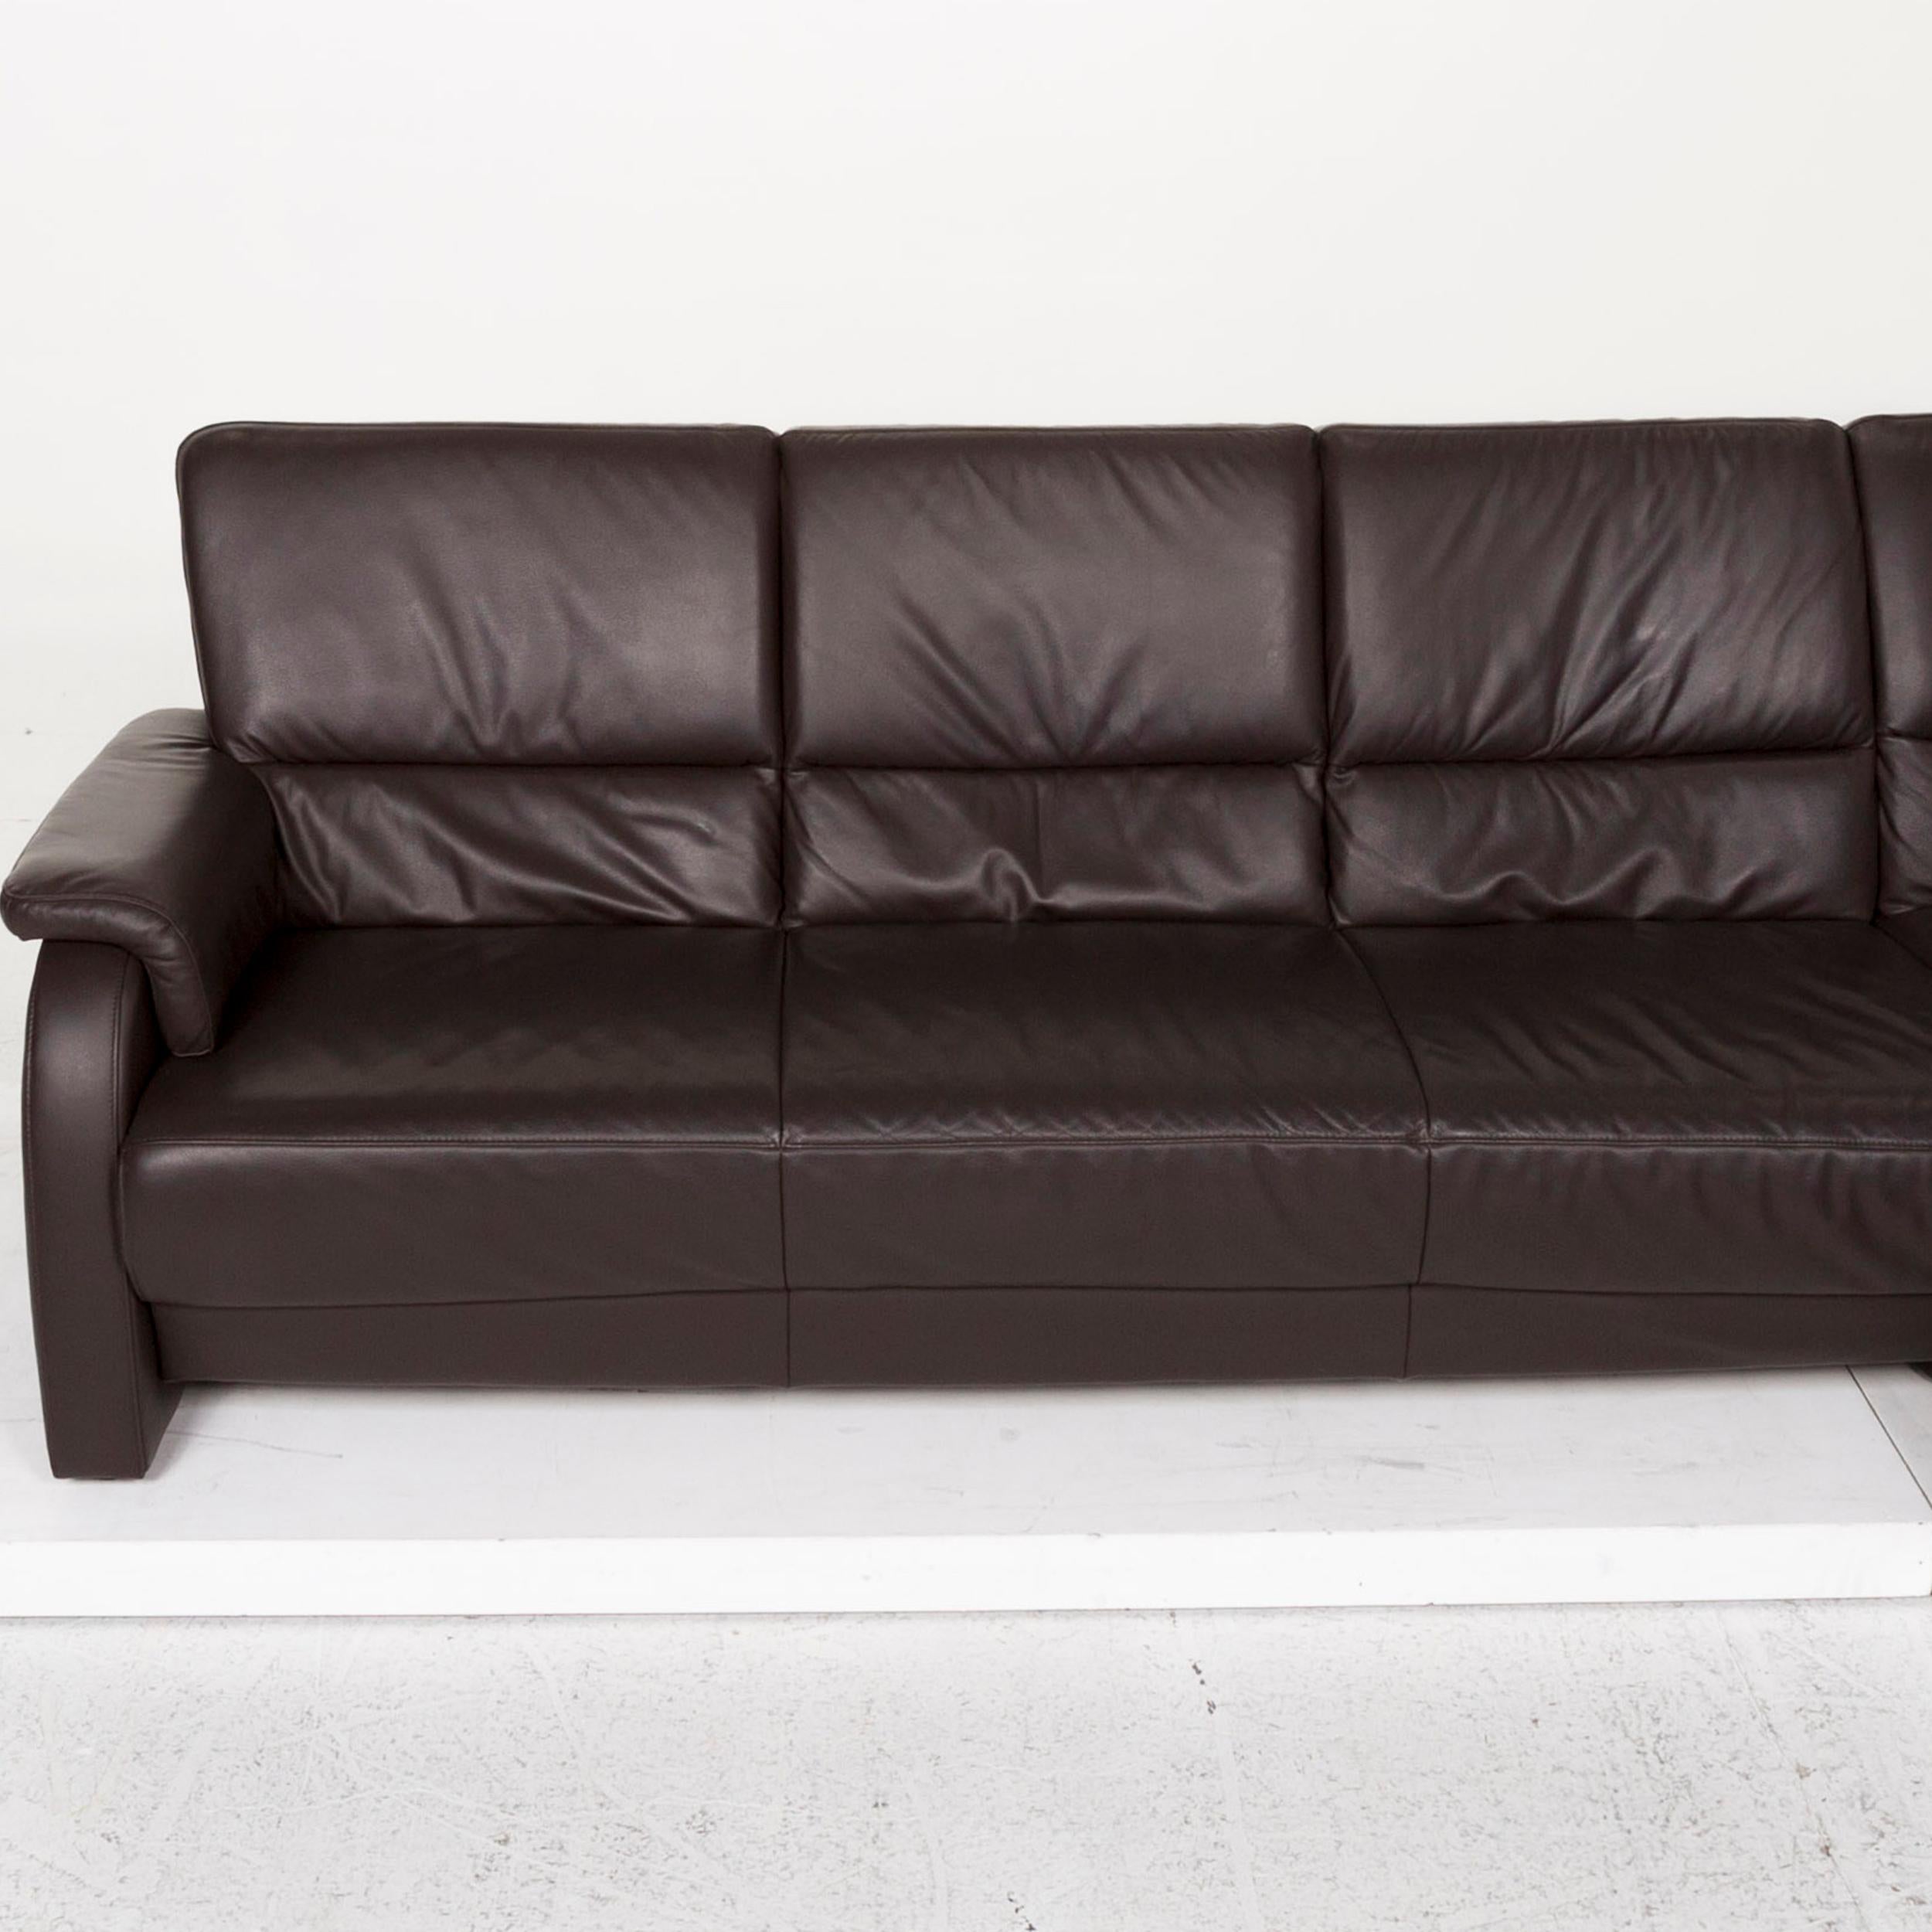 Polish Himolla Leather Corner Sofa Brown Dark Brown Couch For Sale